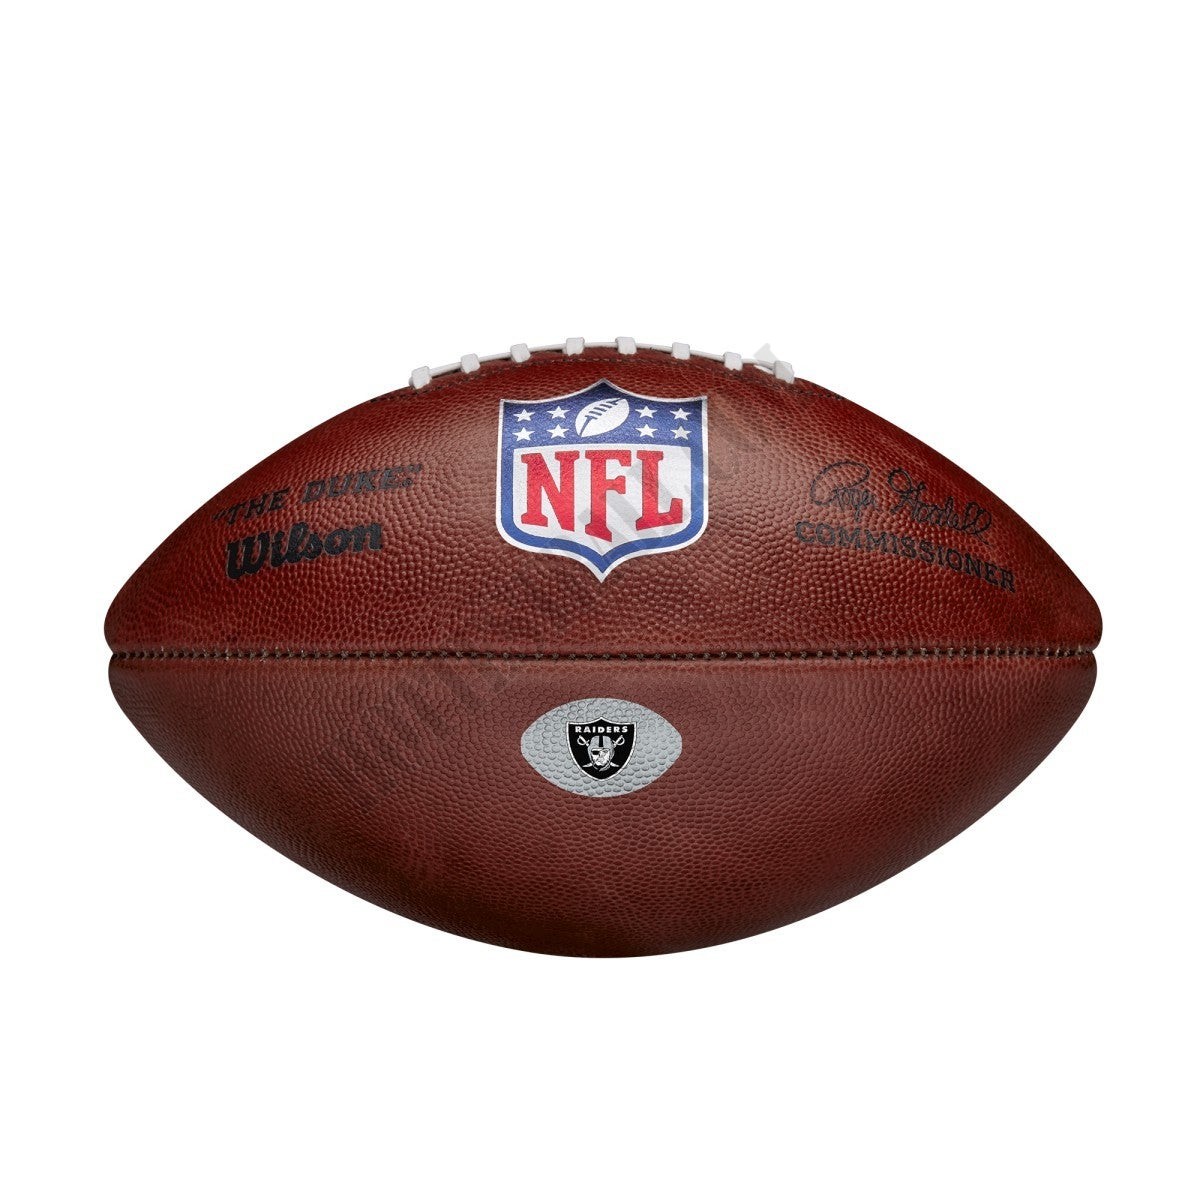 The Duke Decal NFL Football - Las Vegas Raiders - Wilson Discount Store - -0